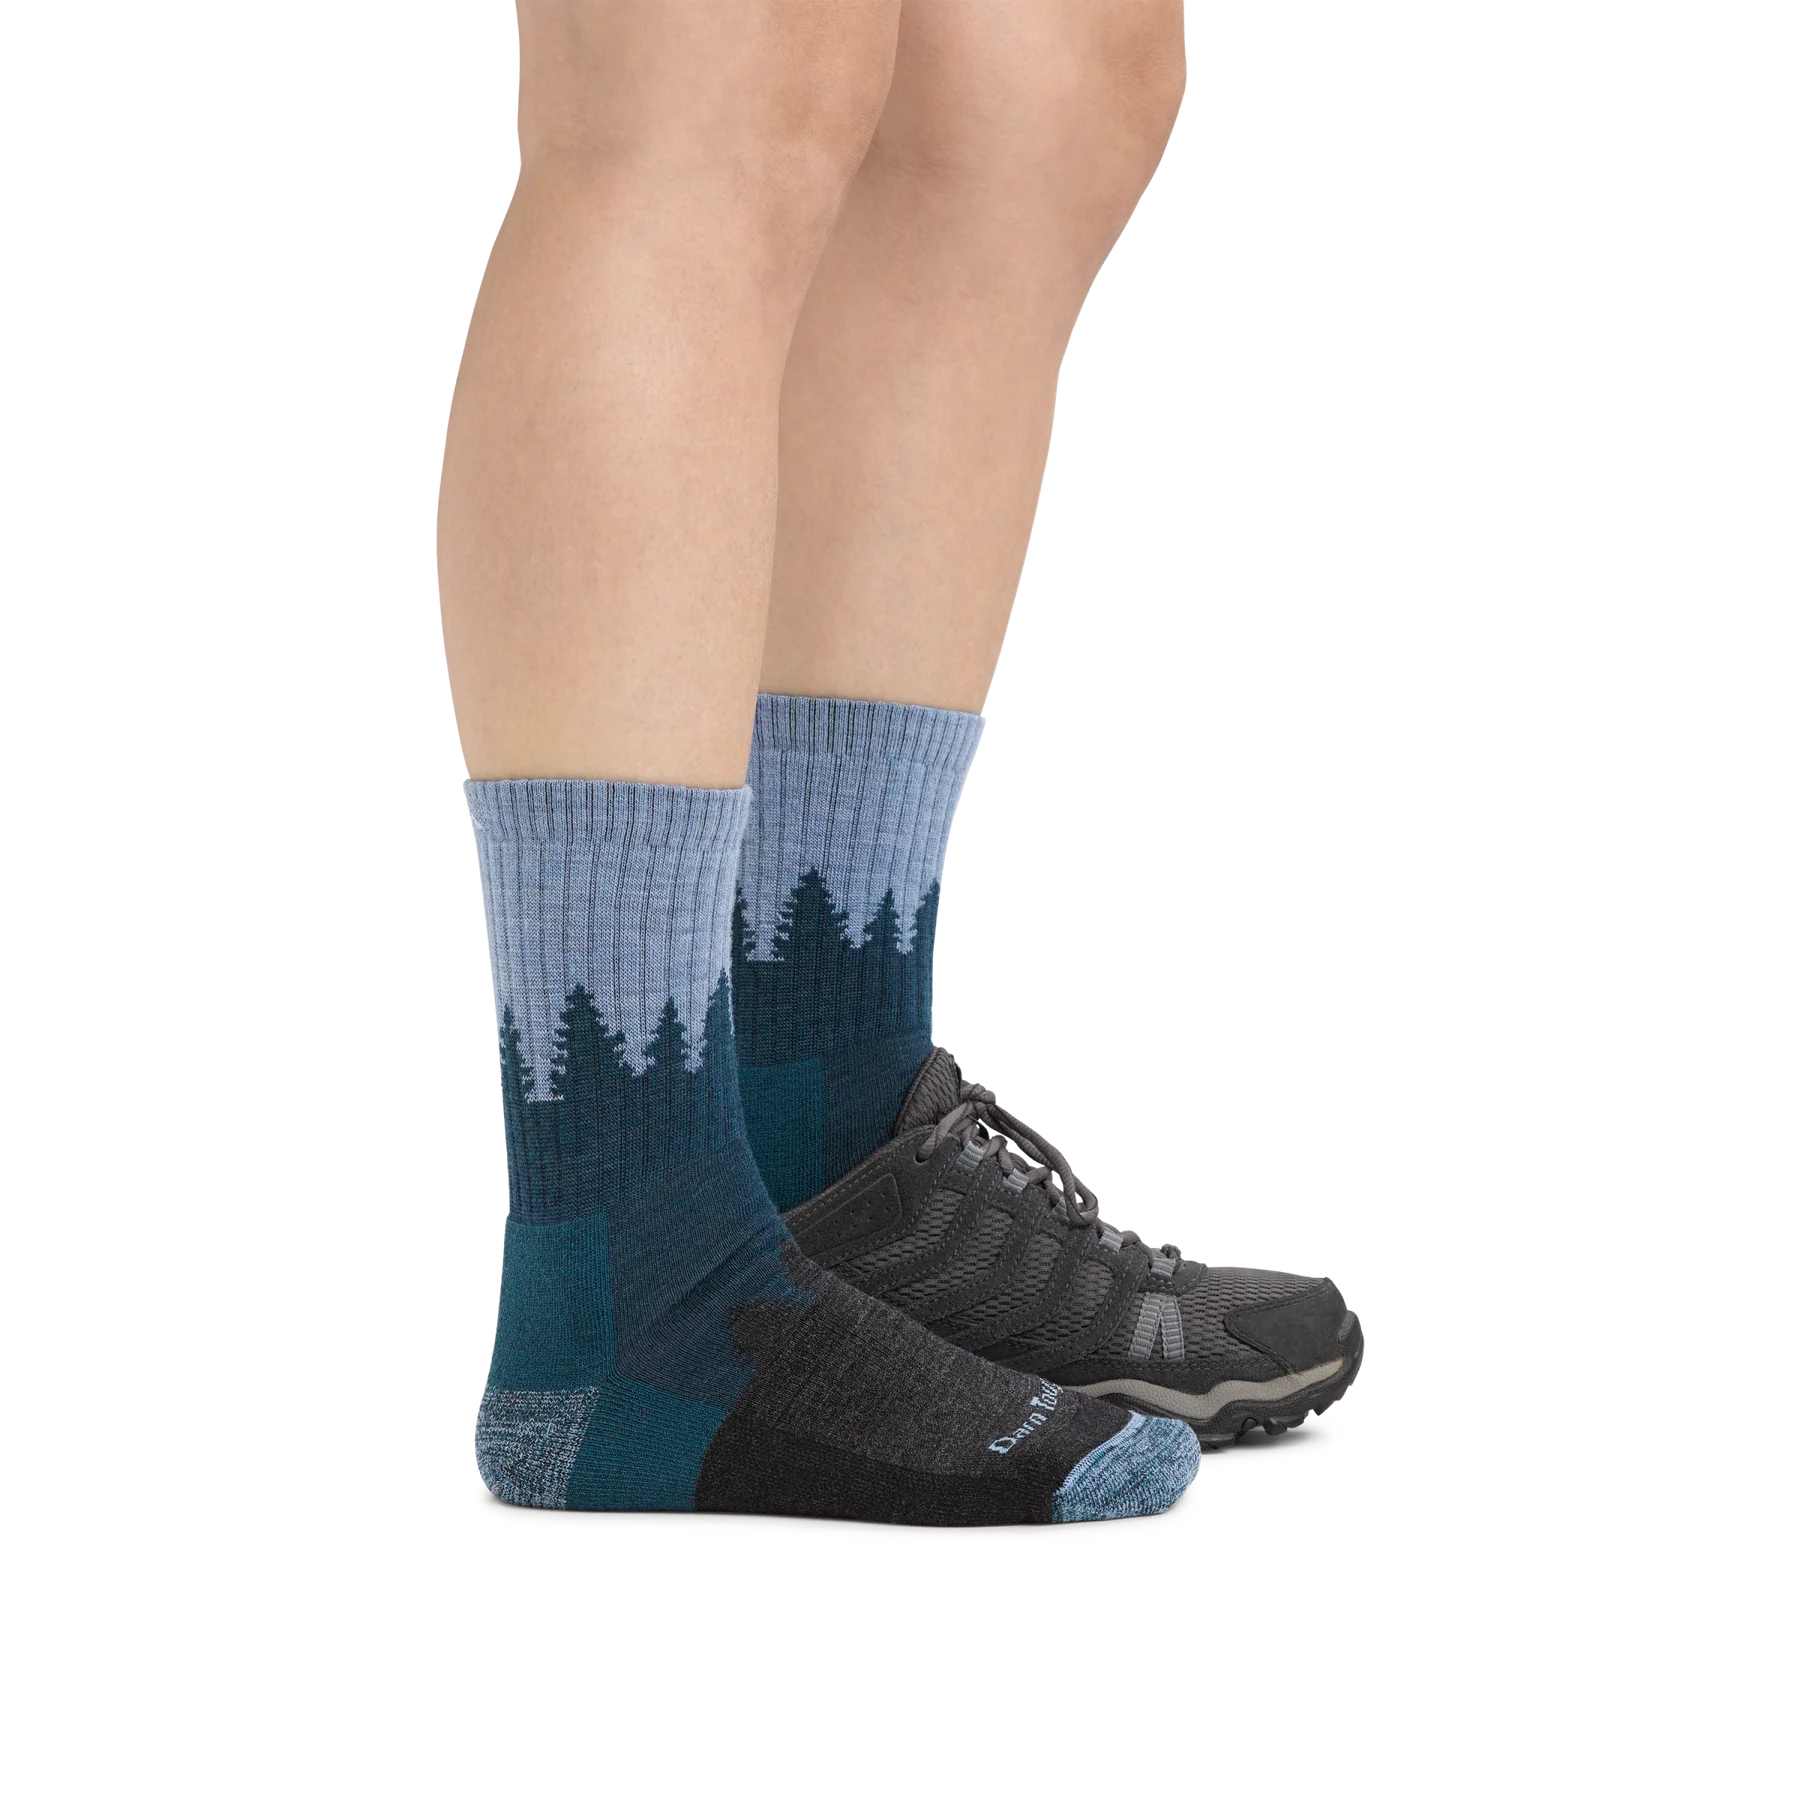 Treeline Micro Crew Midweight Hiking Sock for Women - S24